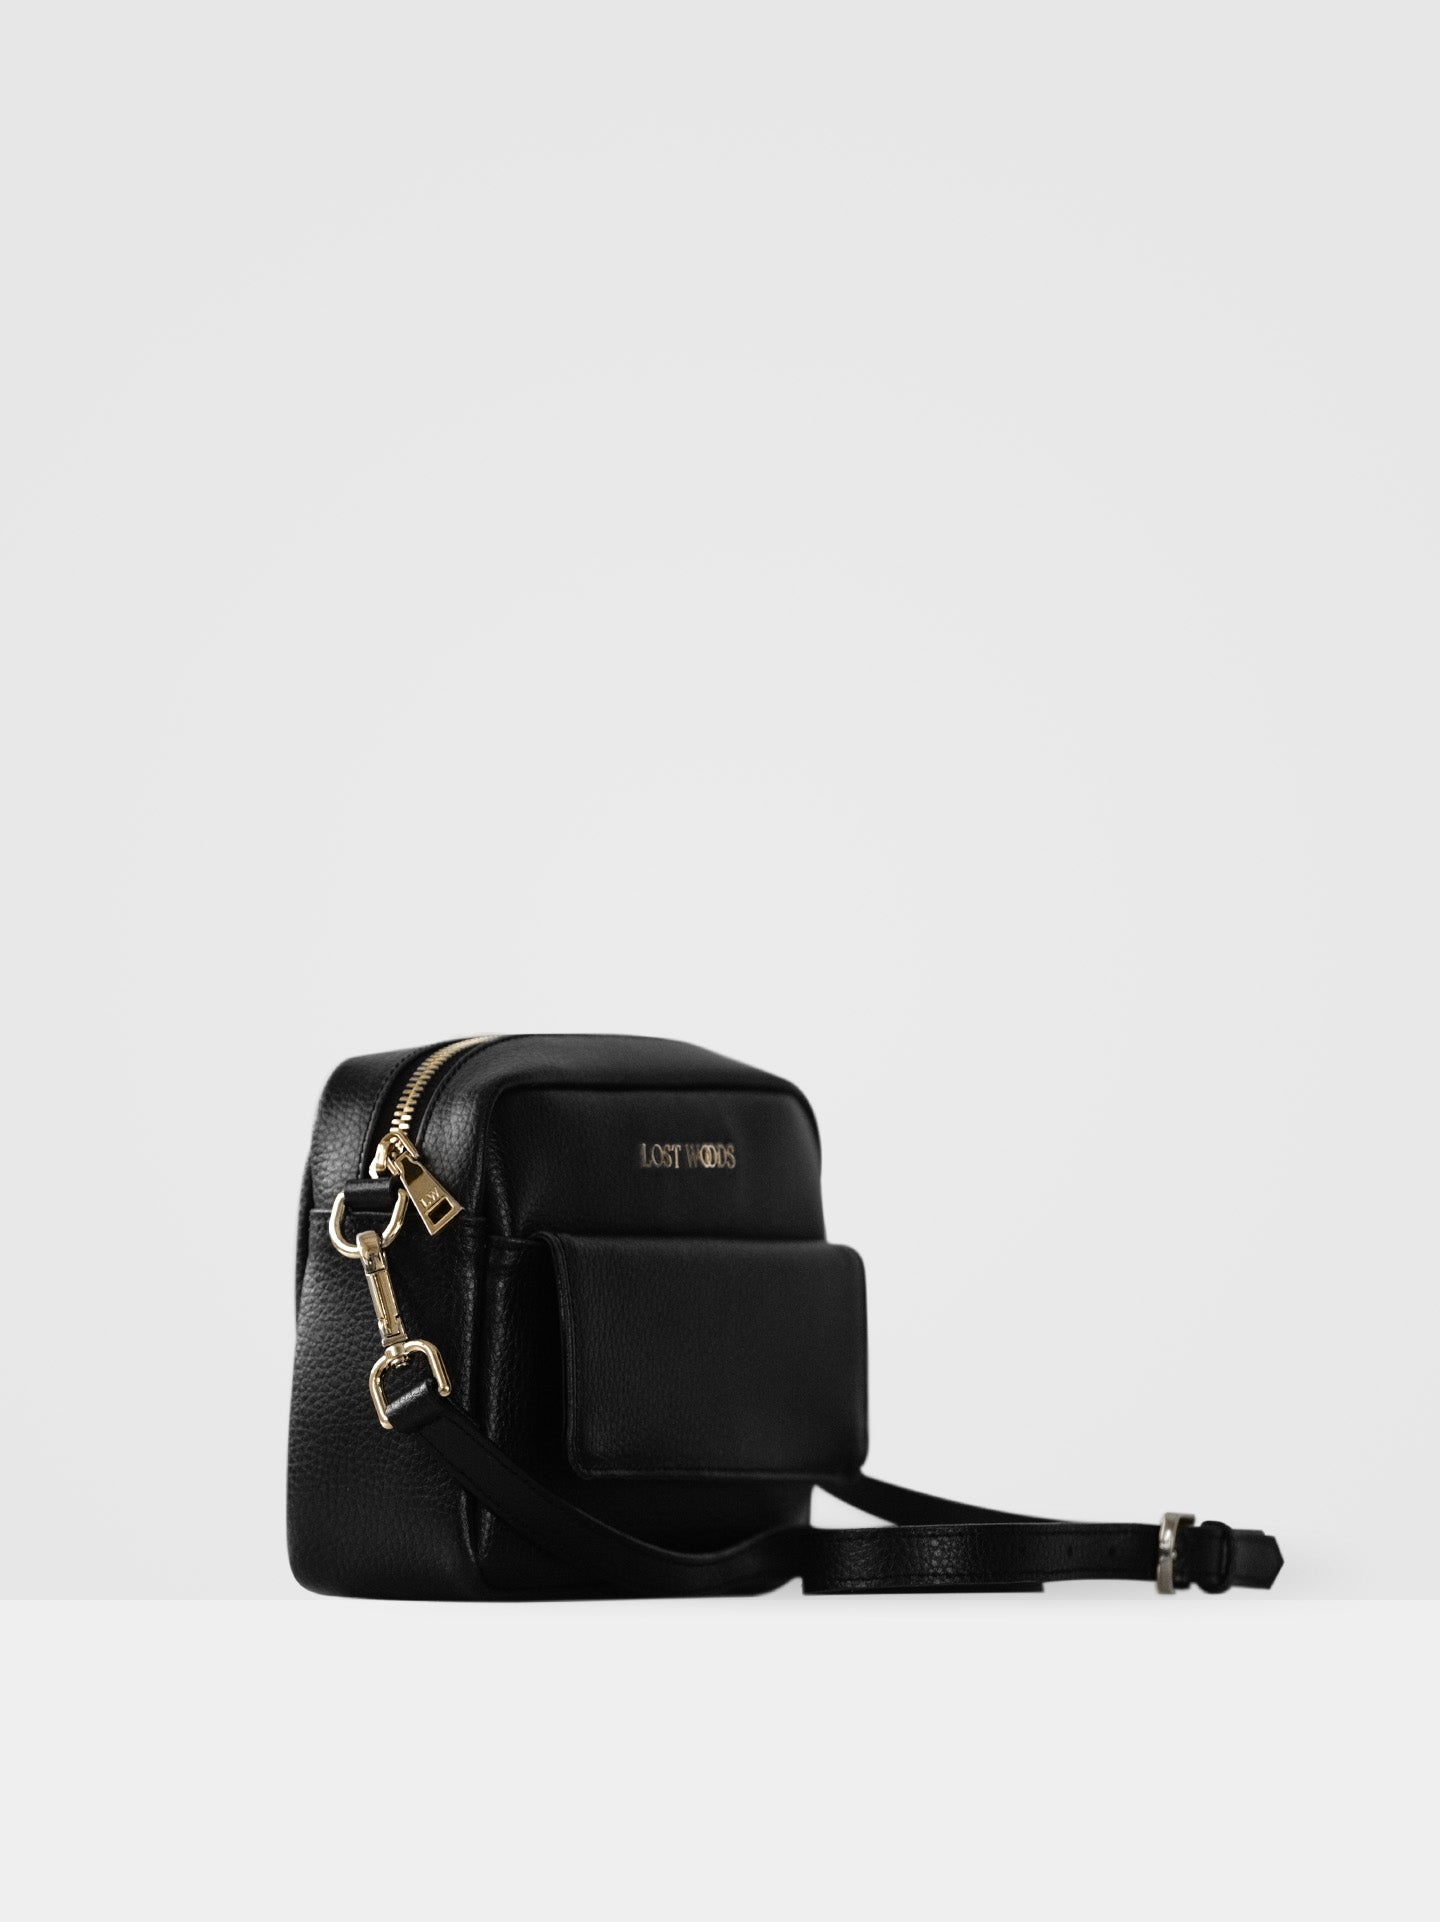 Aster Crossbody Bag in Black & Gold